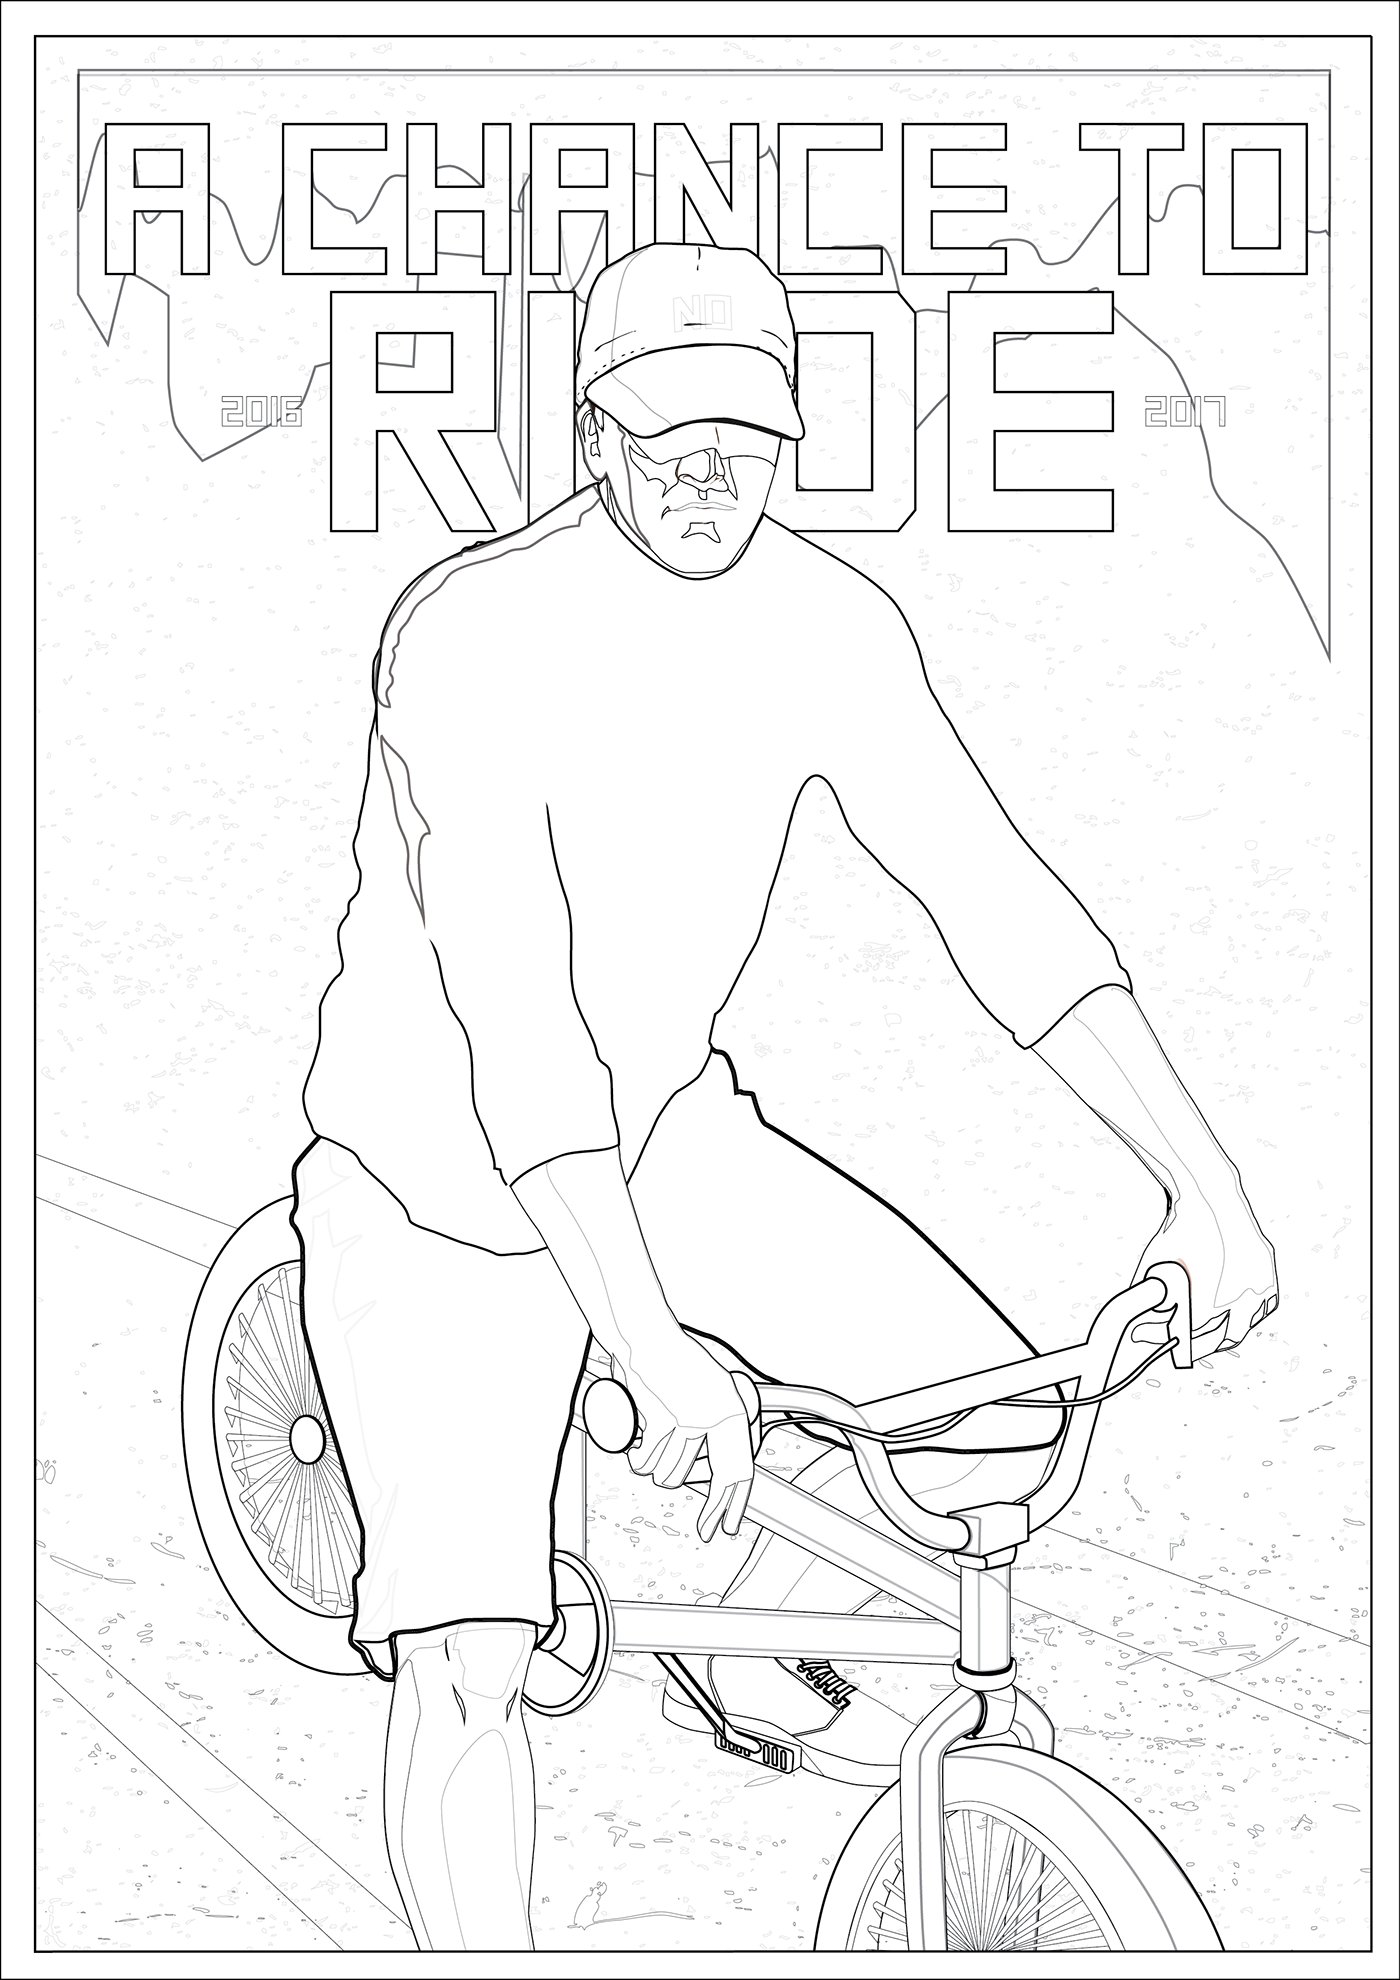 ILLUSTRATION  Digital Art  vector art Illustrator Character design  dibujo diseño arte ciclismo ride